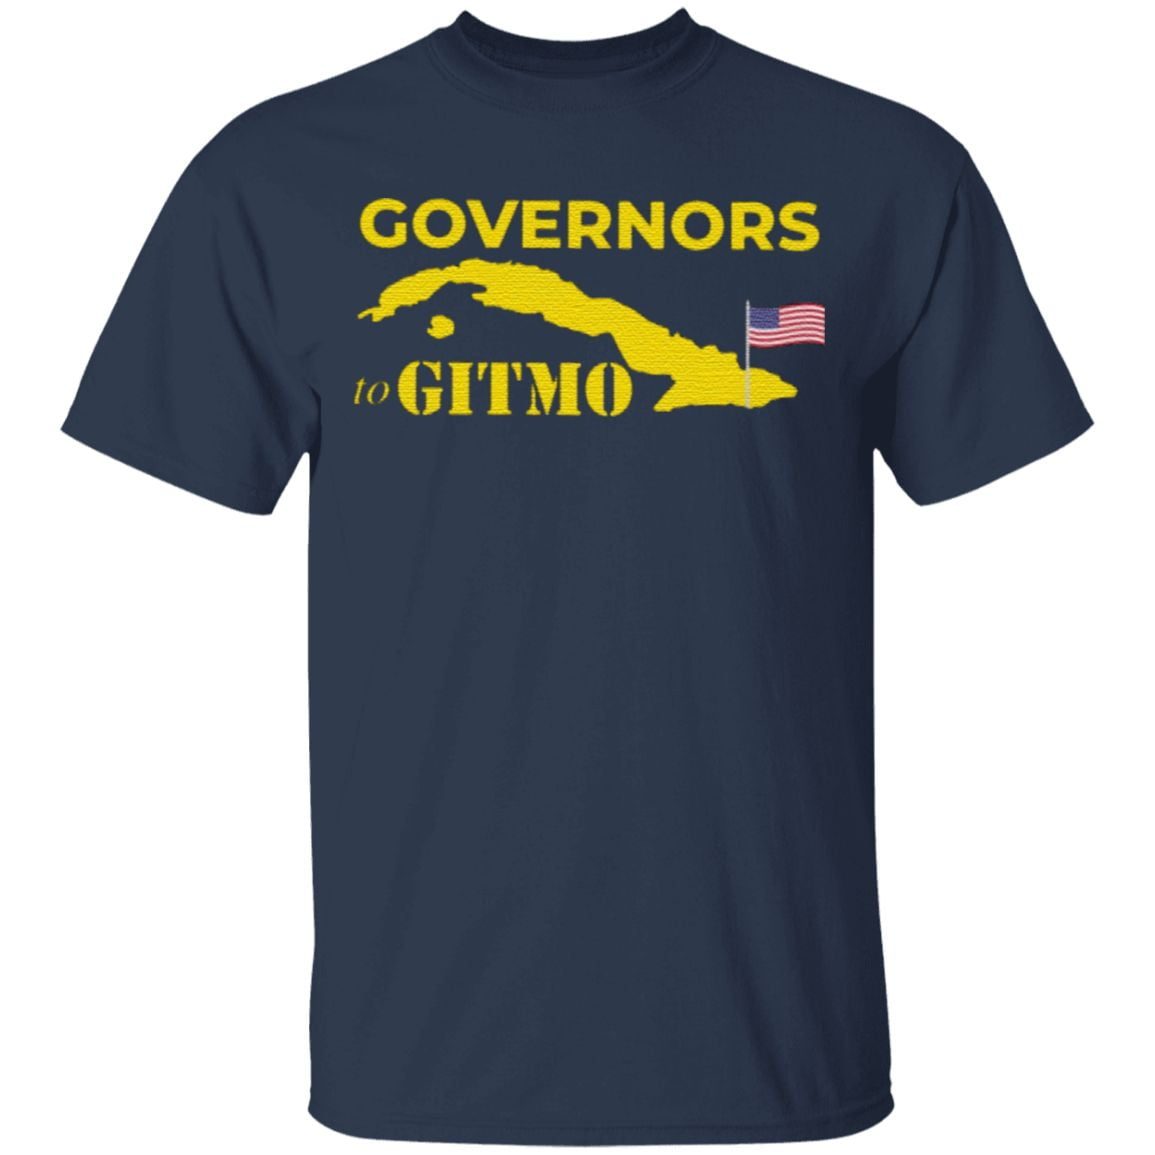 Governors To Gitmo T Shirt